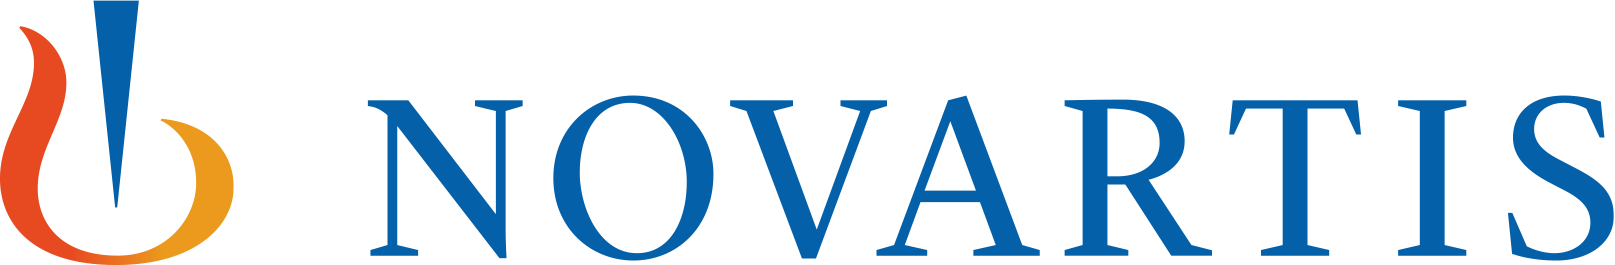 novartis-logo_web